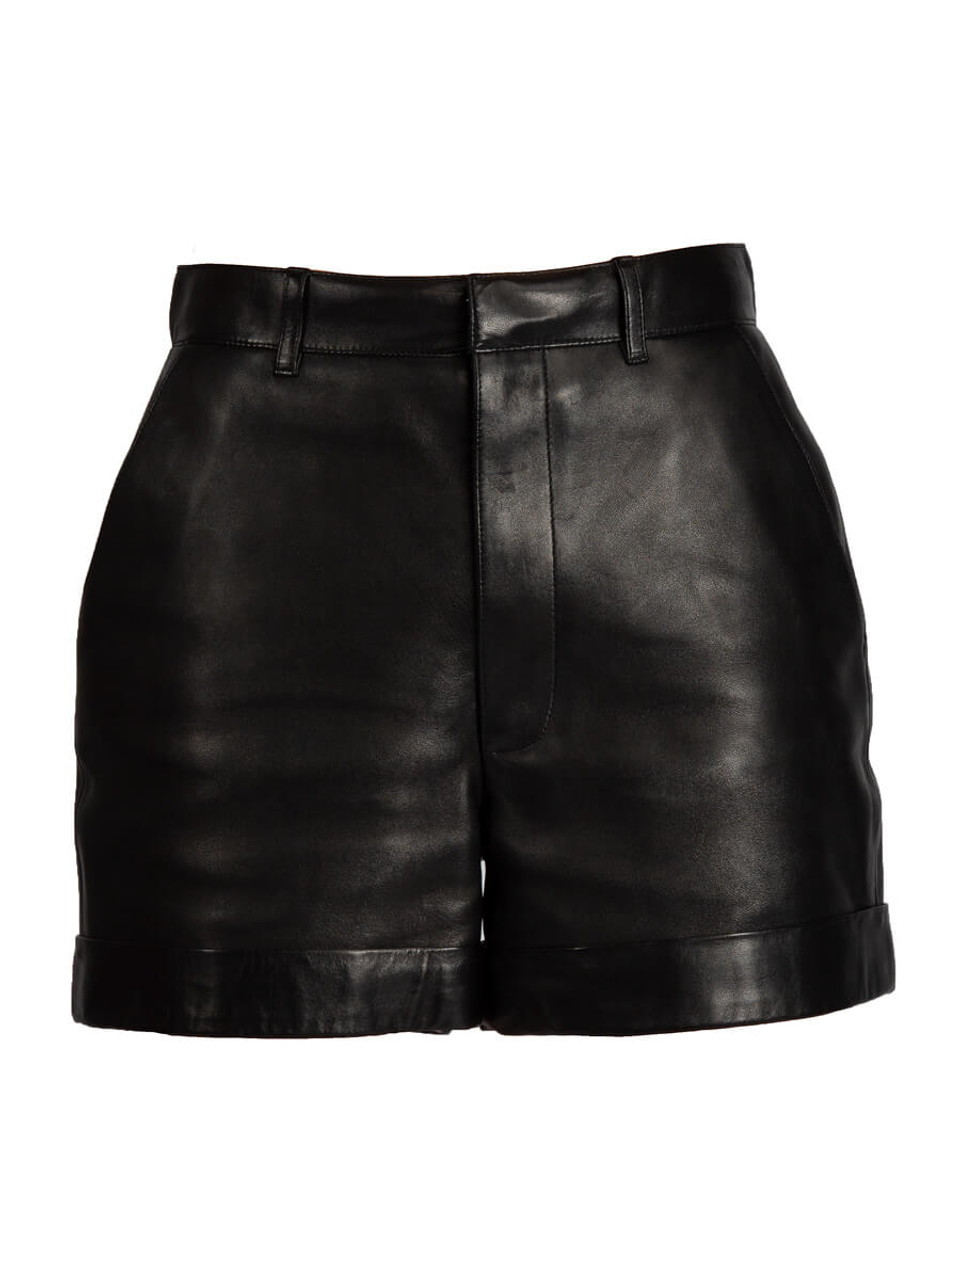 Women Saint Laurent Black Leather Mini Shorts - Size S UK8 US4 FR36